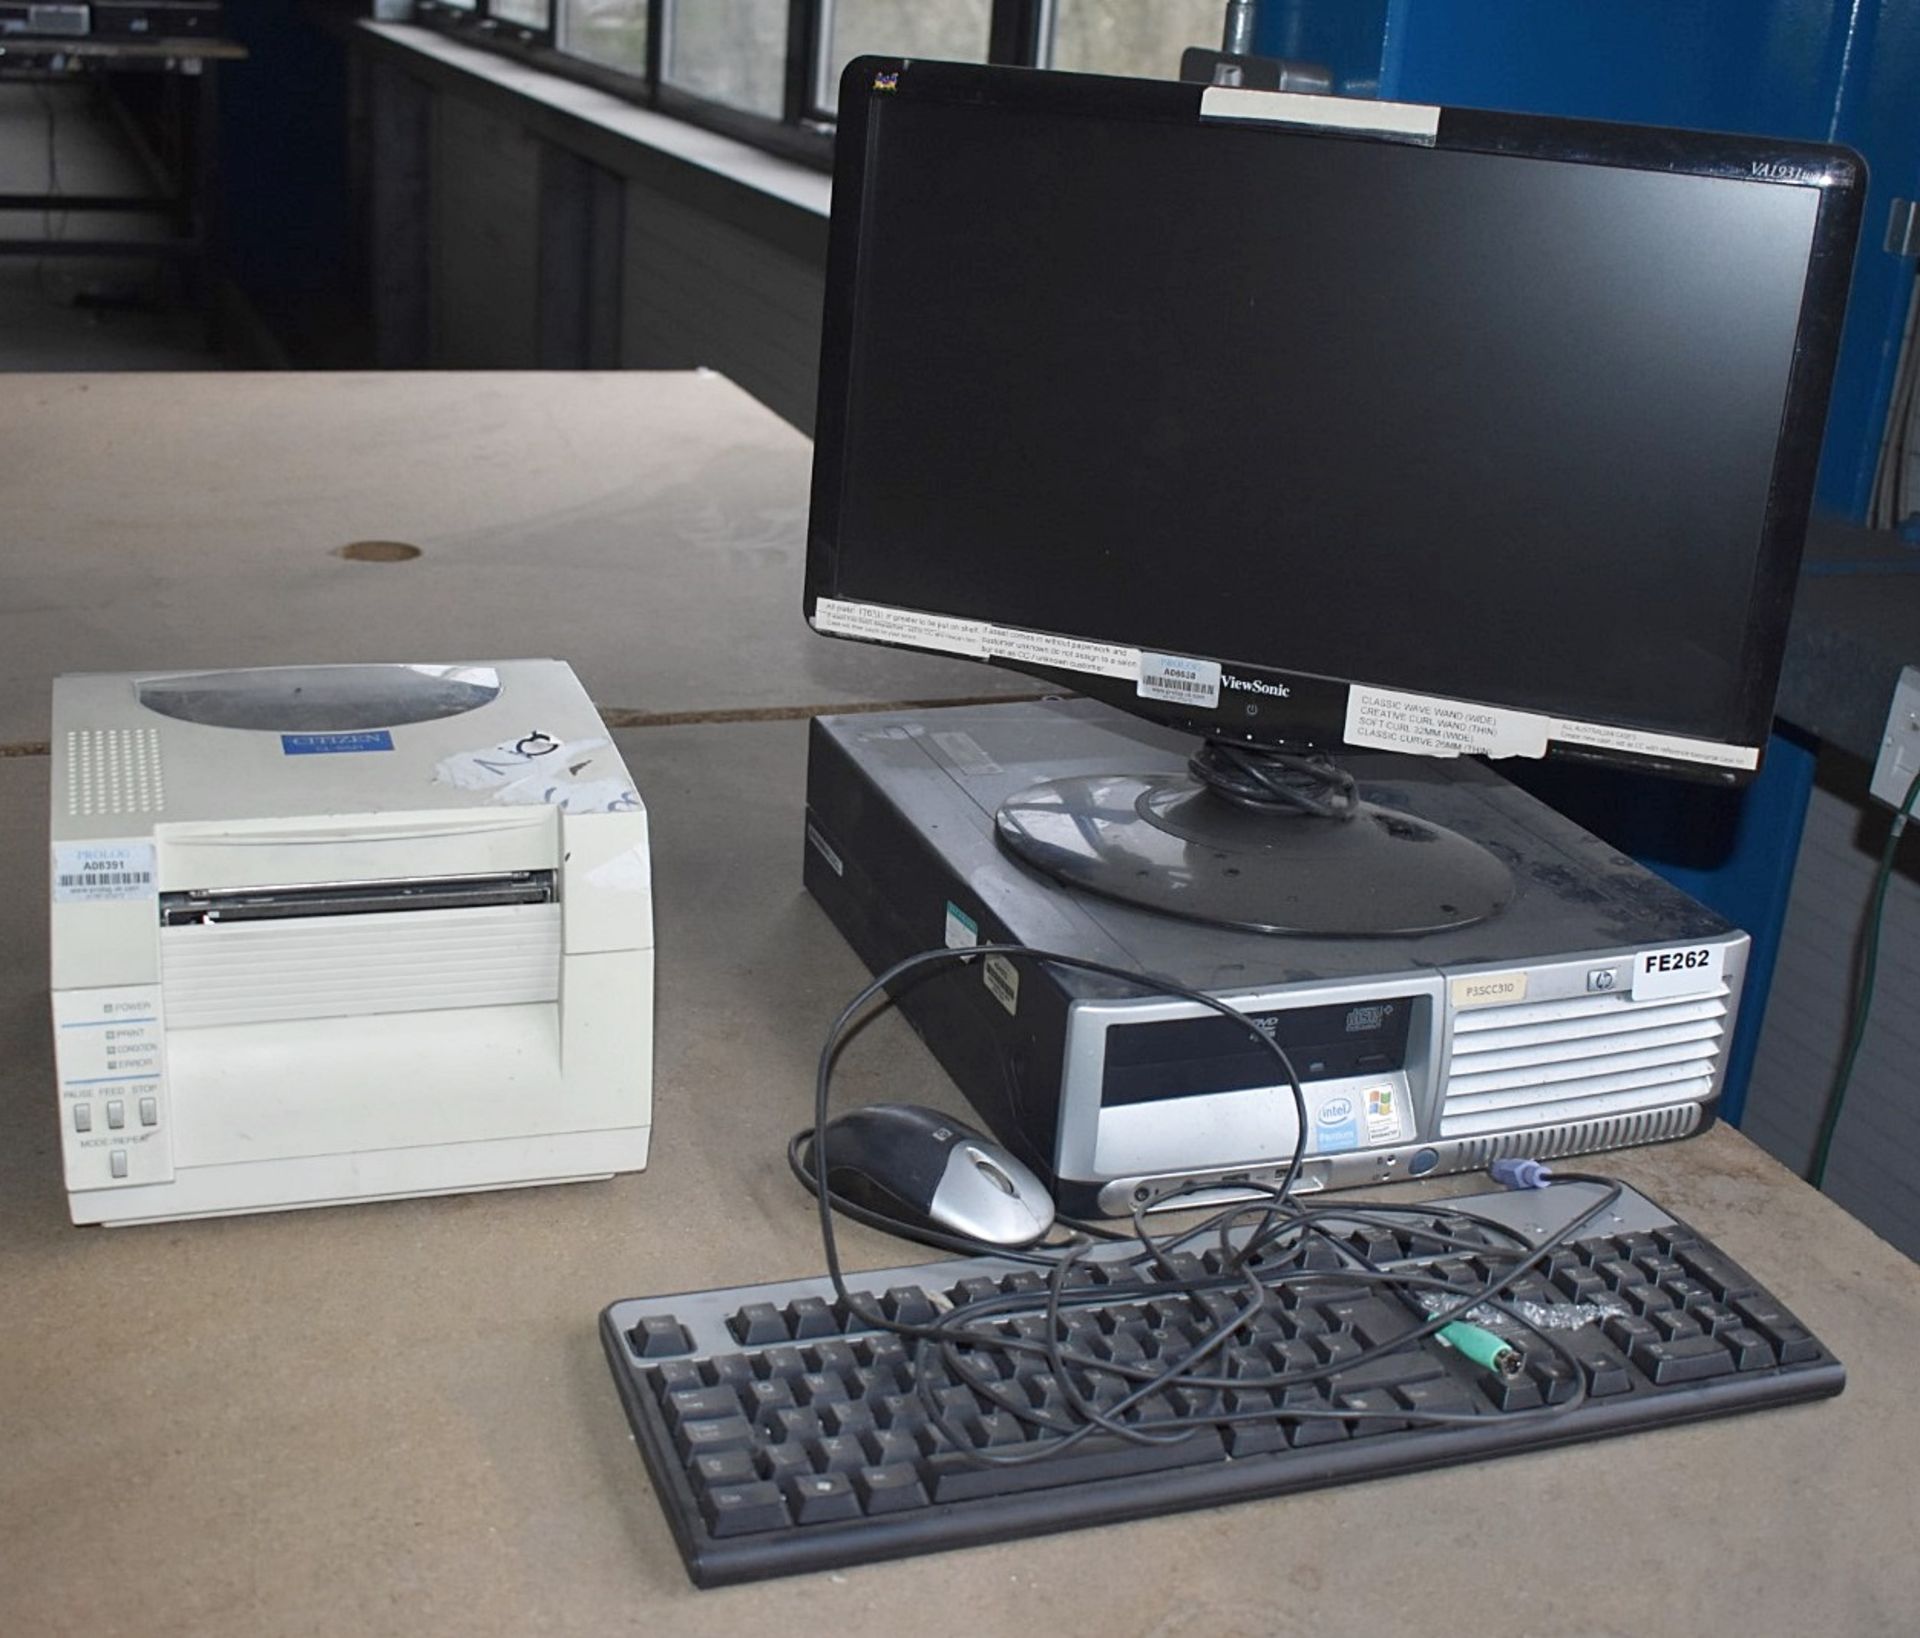 1 x Assorted Lot of Computer Equipment - Includes 1 x Desktop PC, 1 x Monitor, 1 x Label Printer